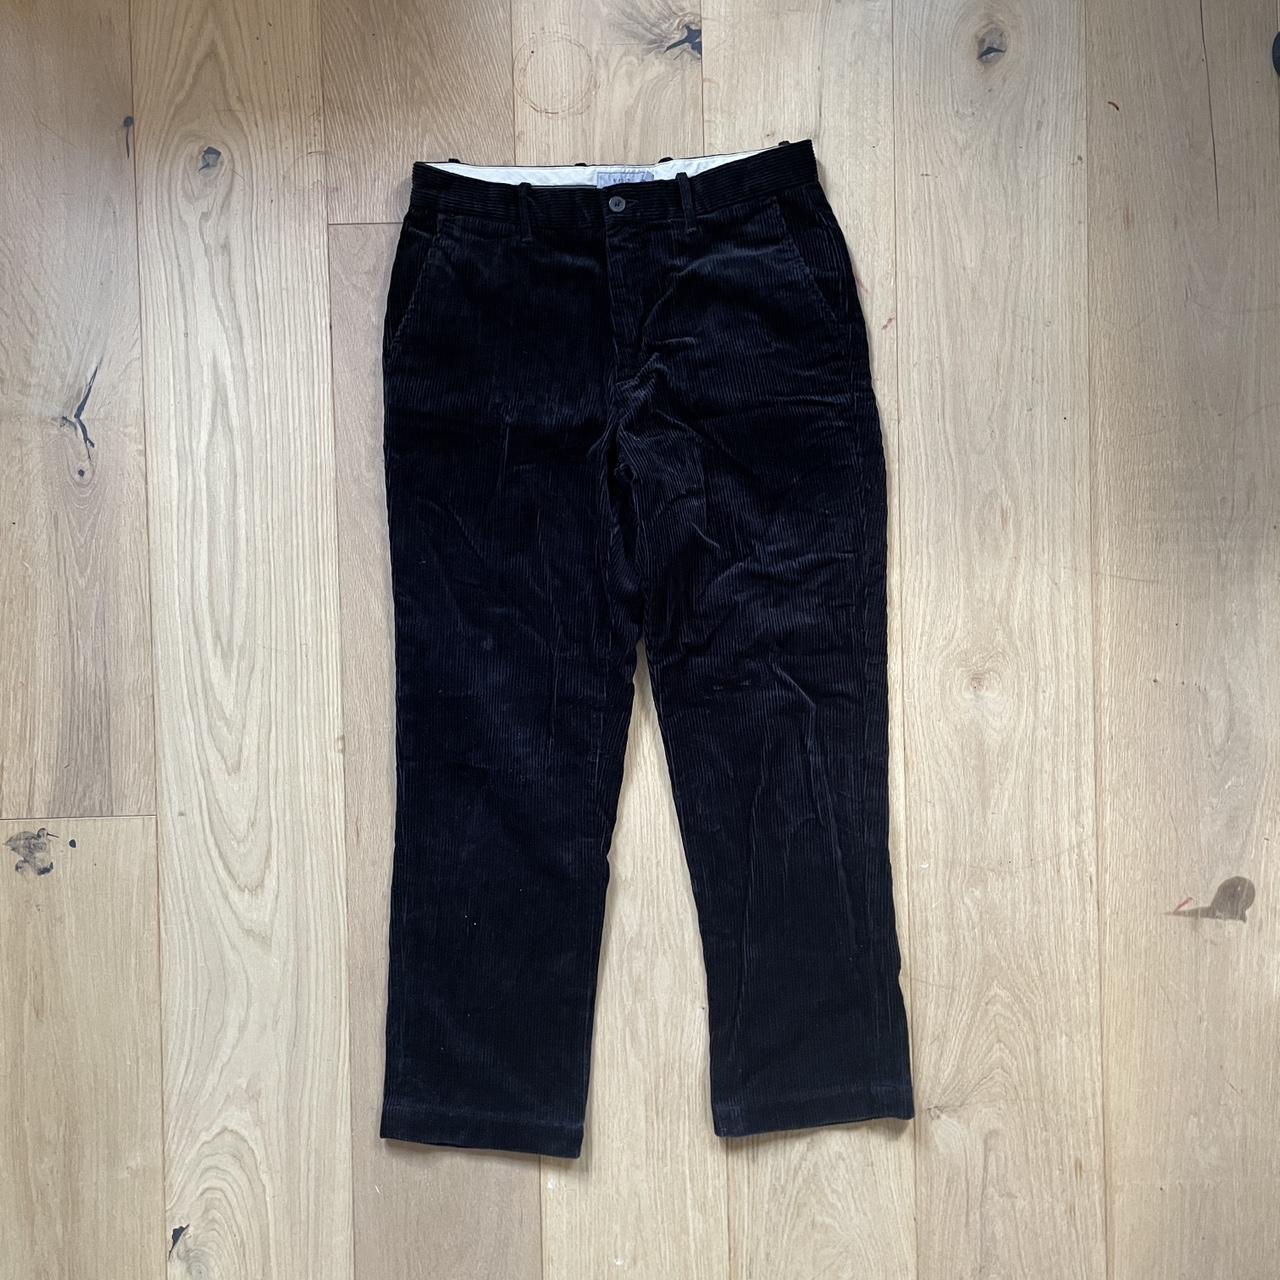 Corduroy M&S Trousers Velvety super black 32... - Depop